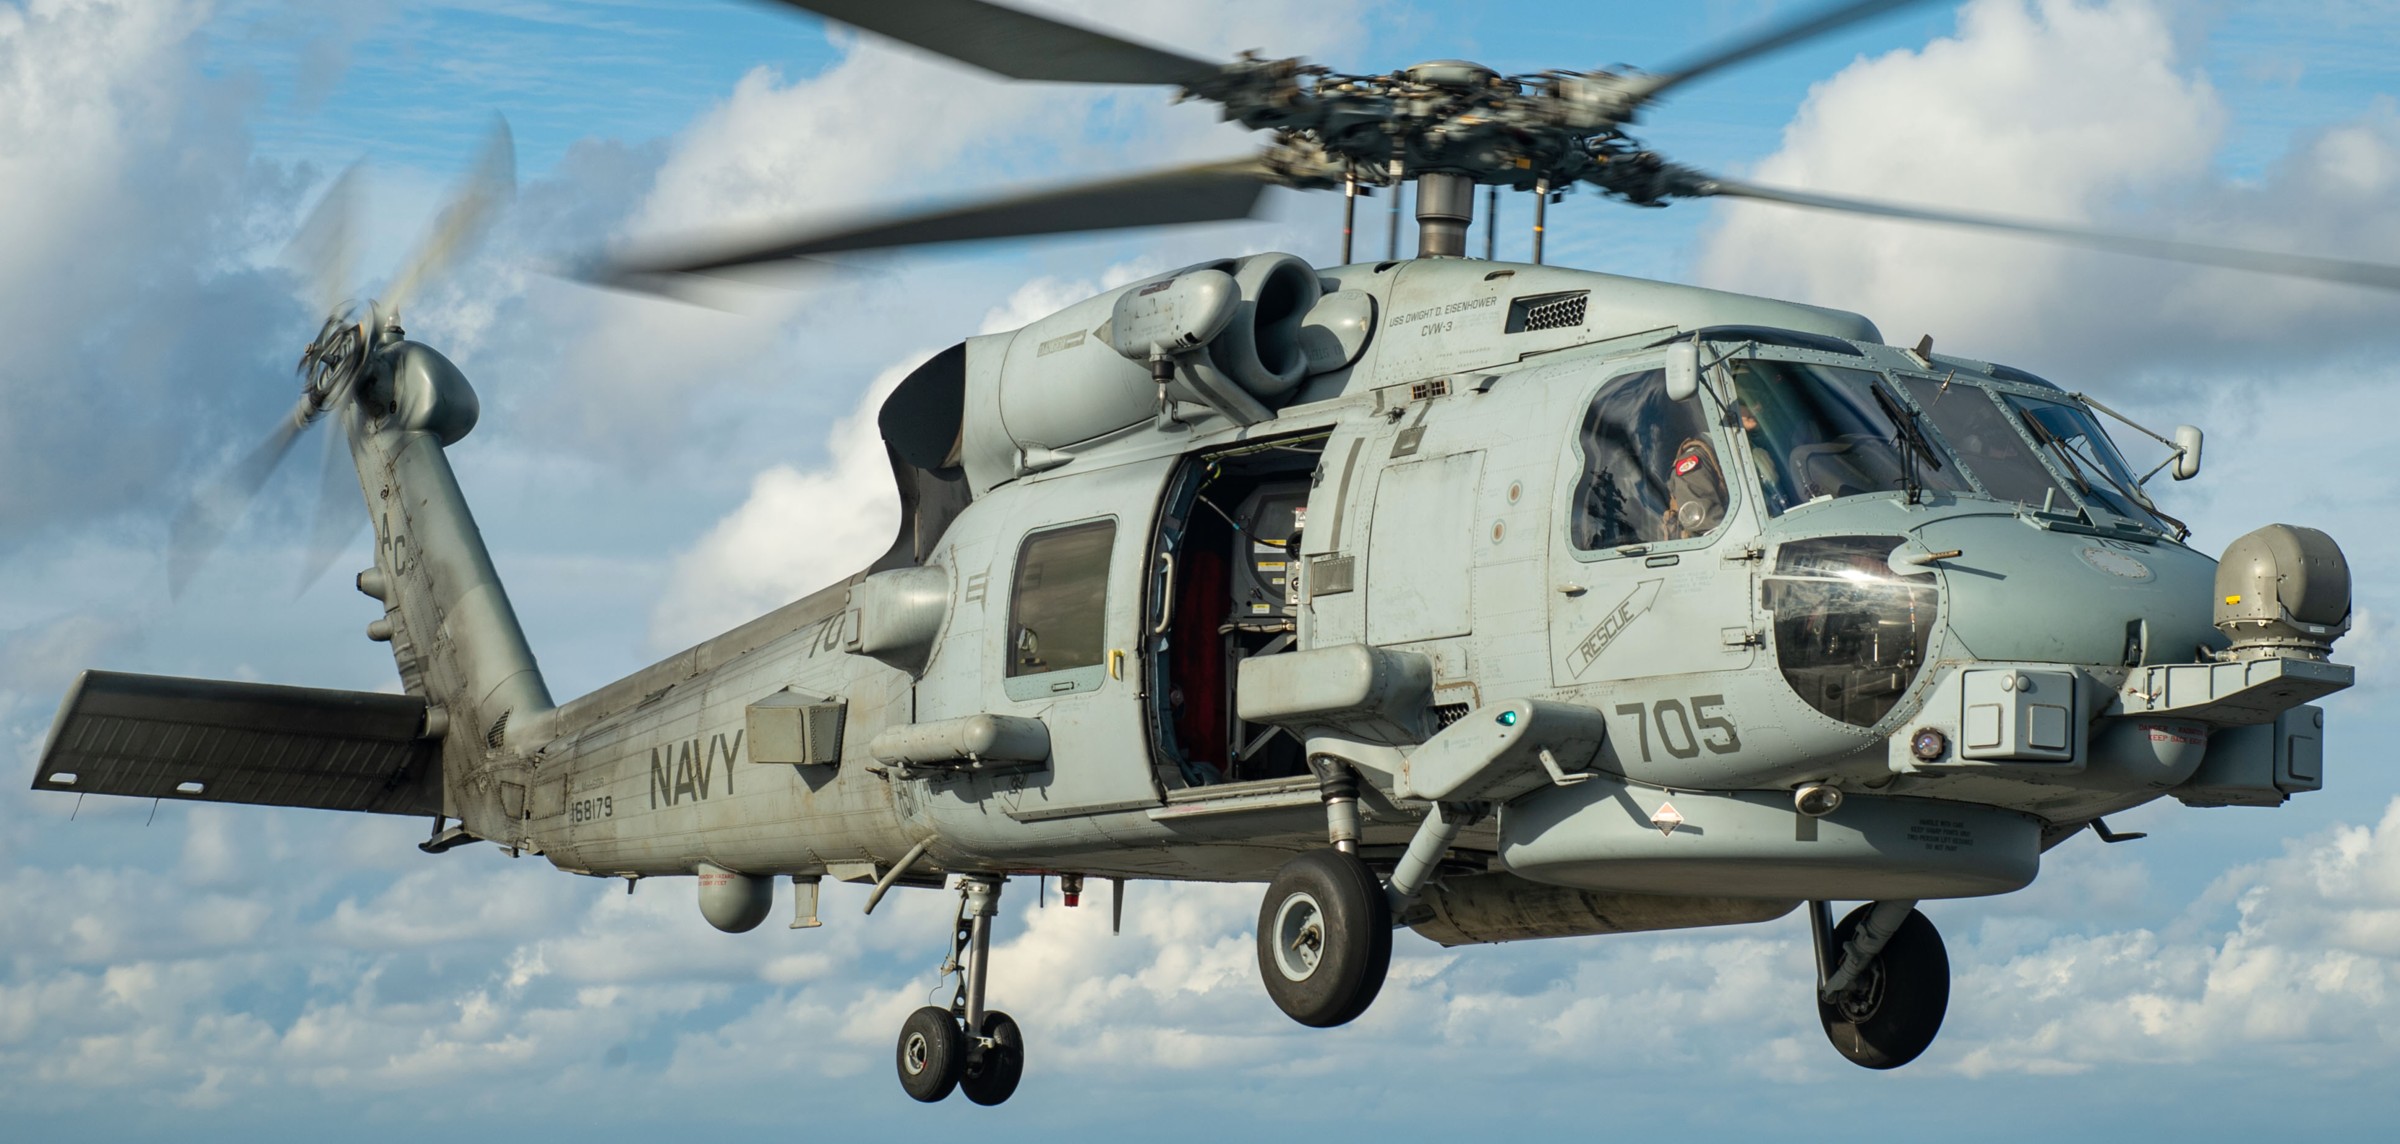 hsm-74 swamp foxes helicopter maritime strike squadron mh-60r seahawk cvw-3 cvn-69 uss dwight d. eisenhower 107